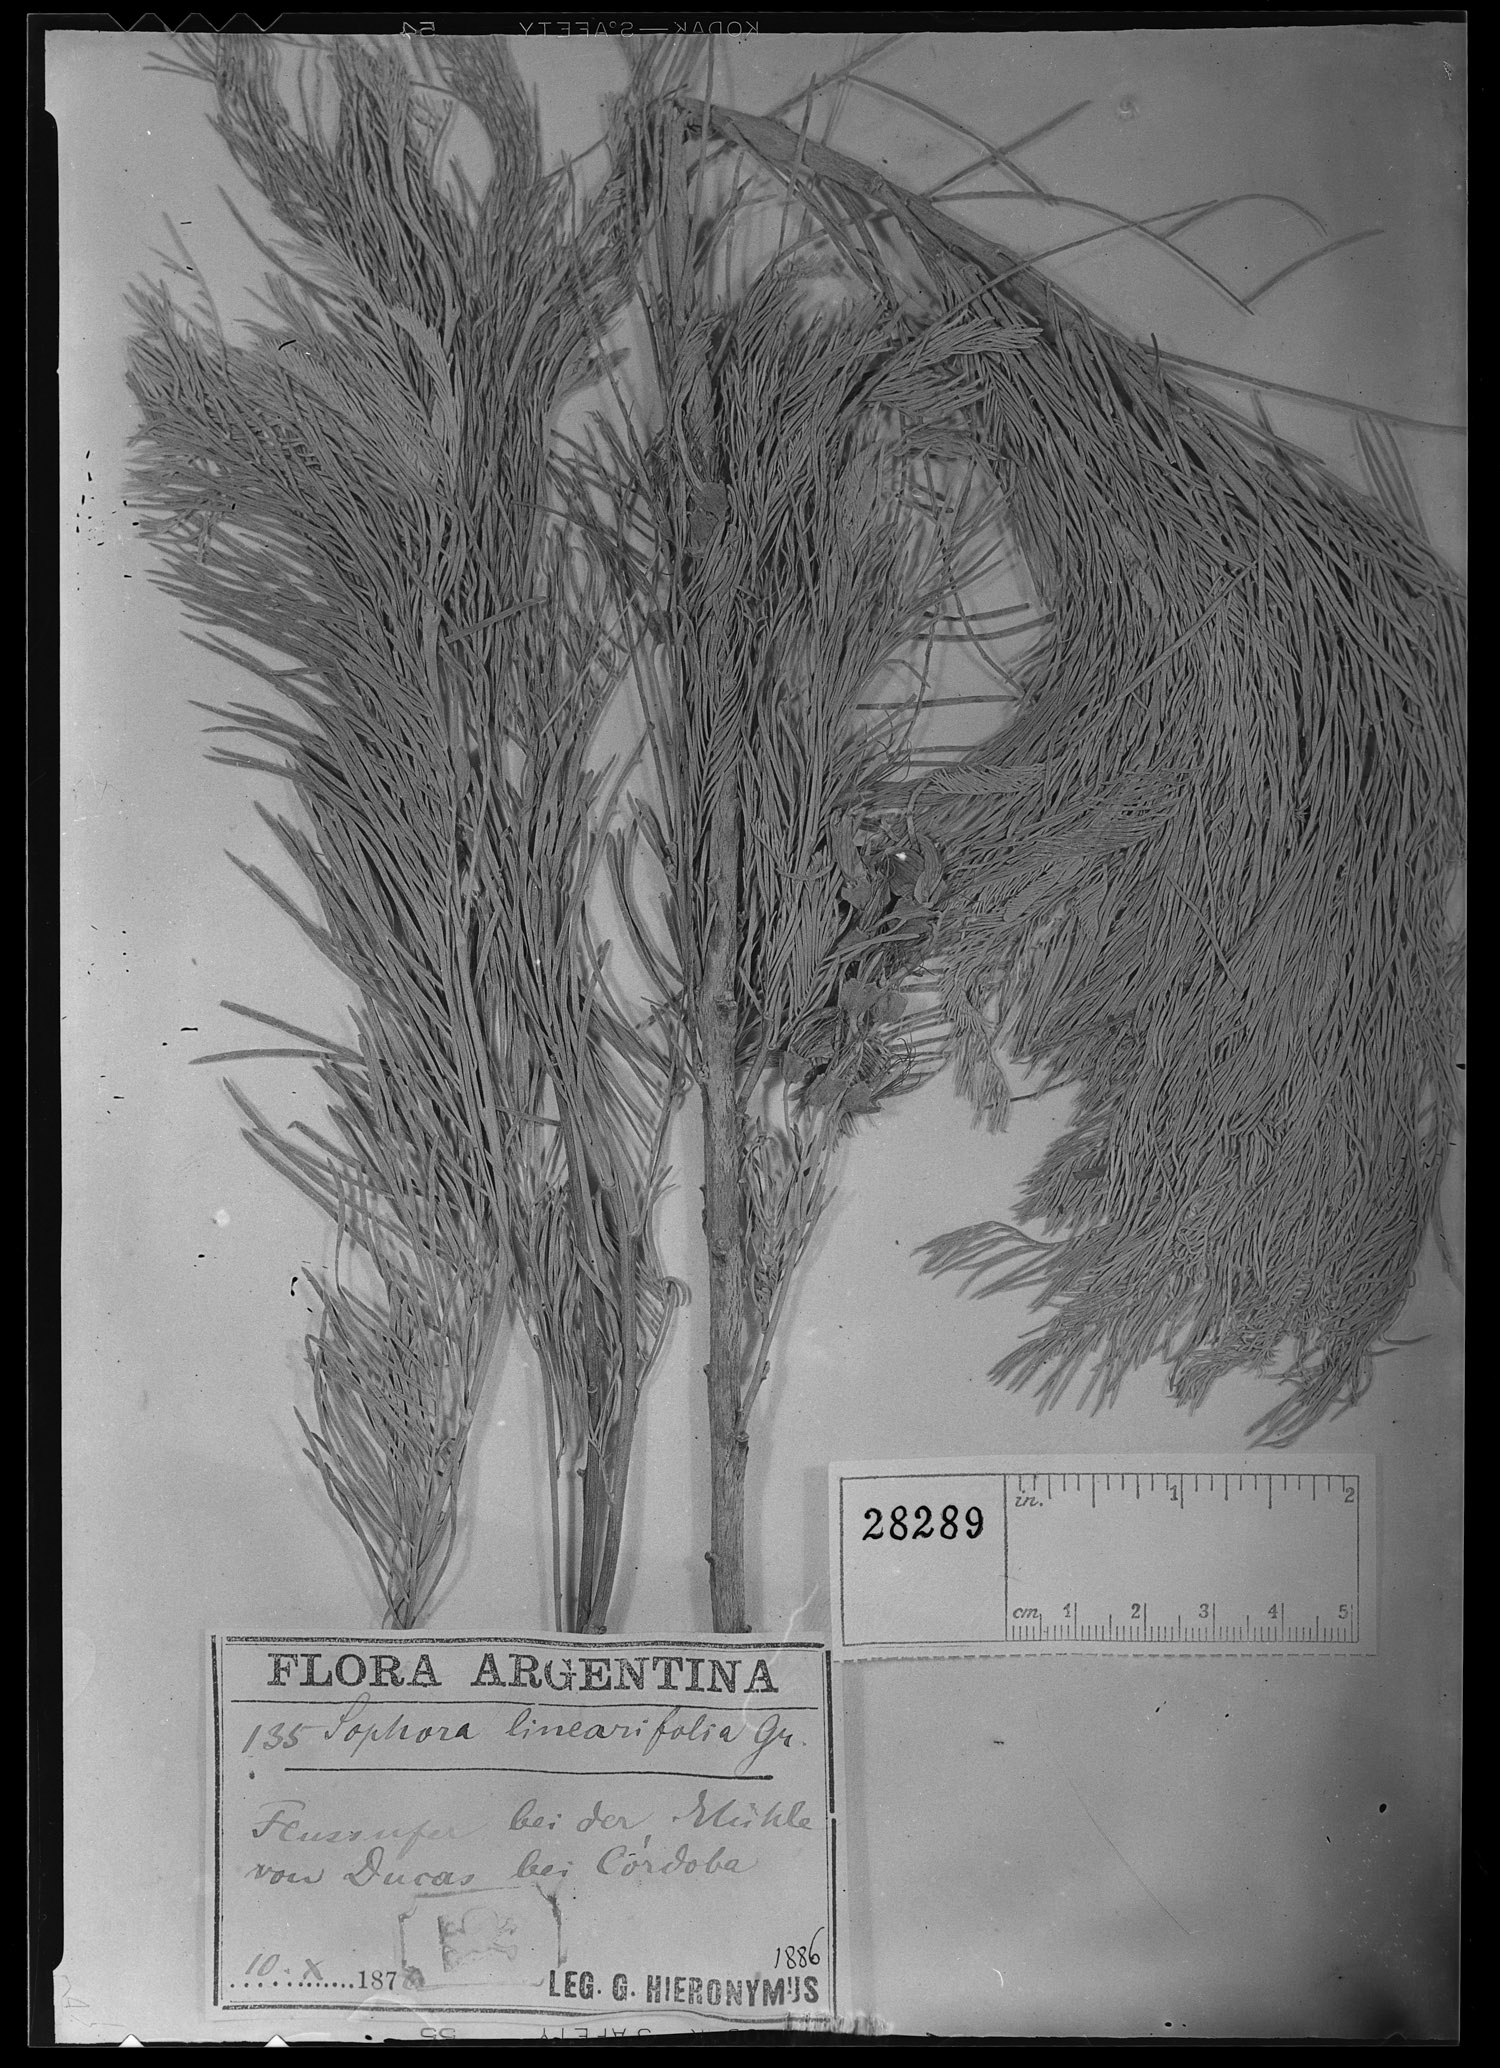 Sophora linearifolia image